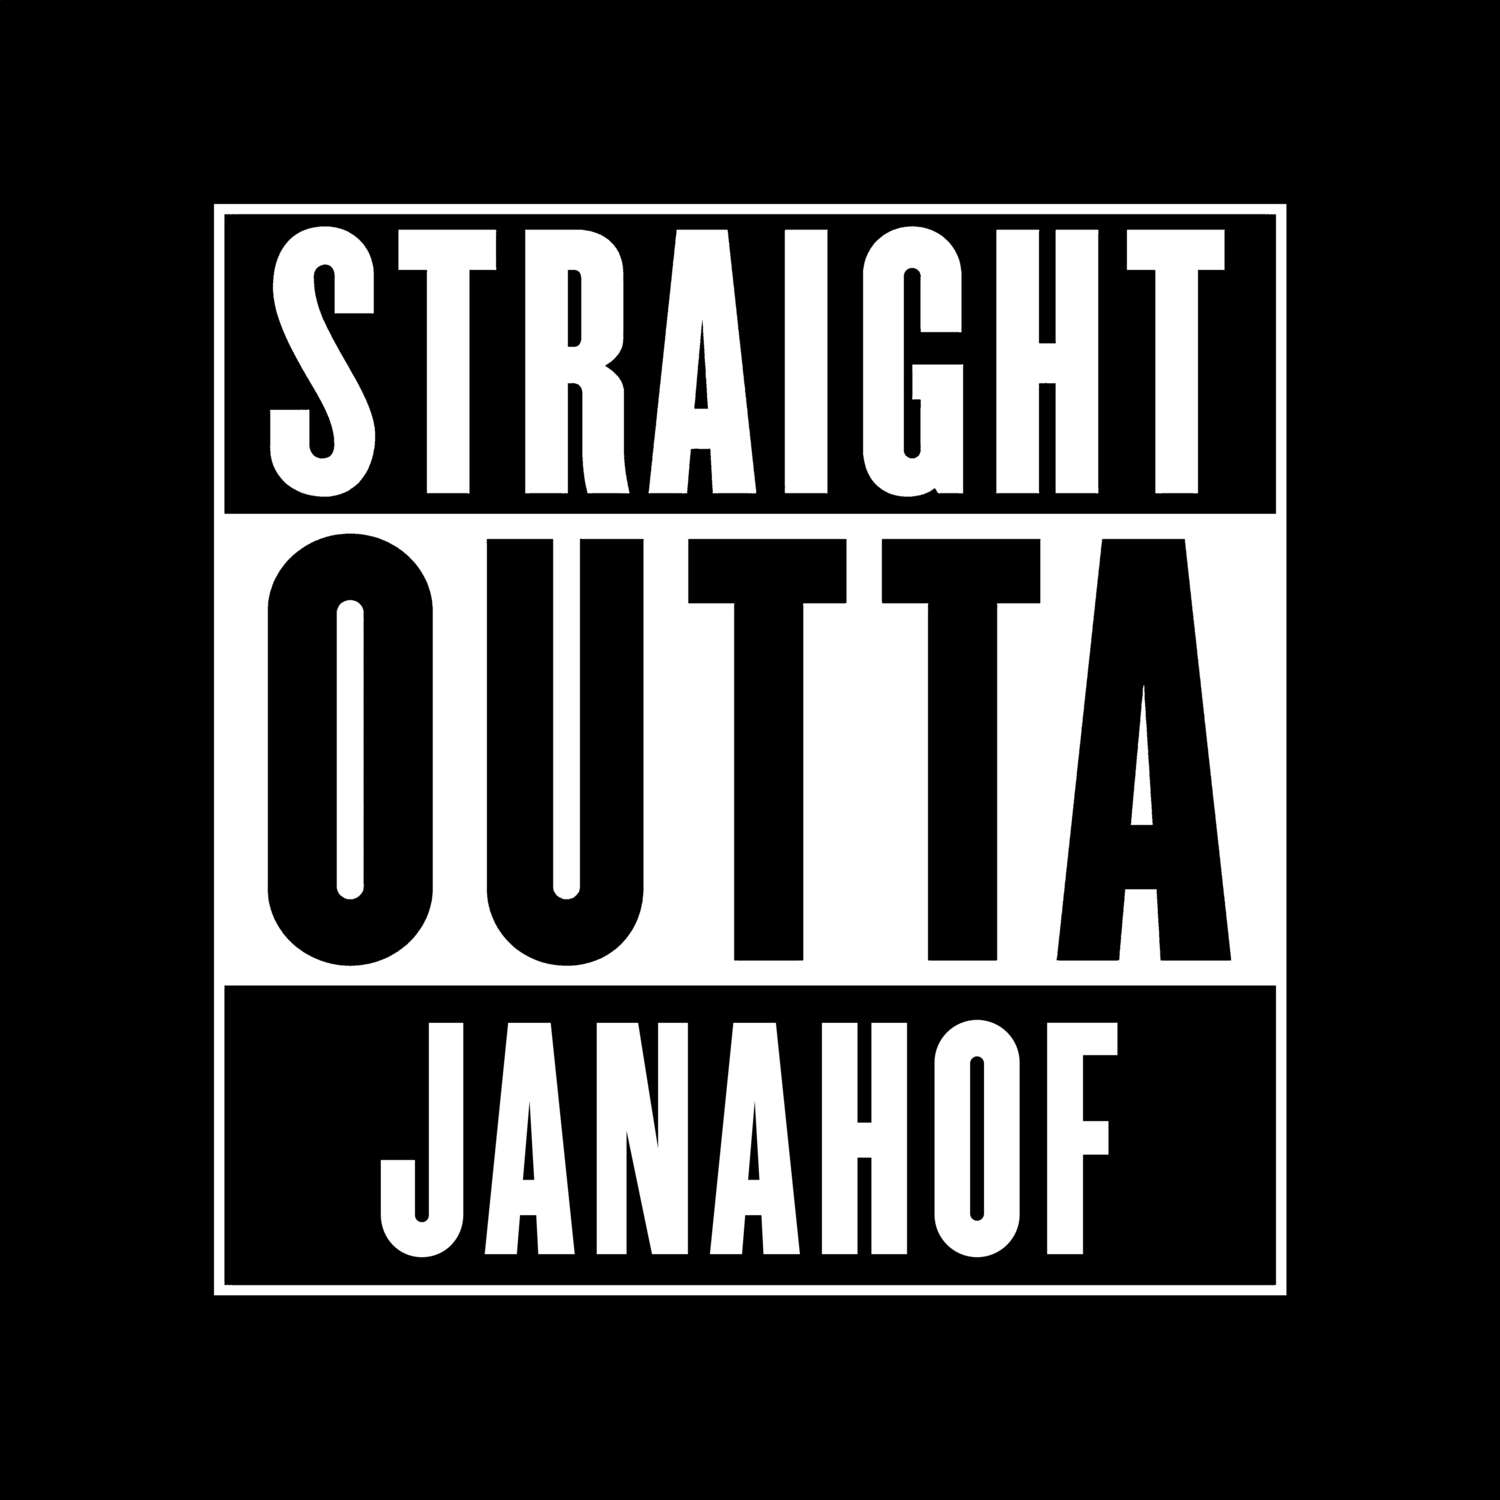 Janahof T-Shirt »Straight Outta«